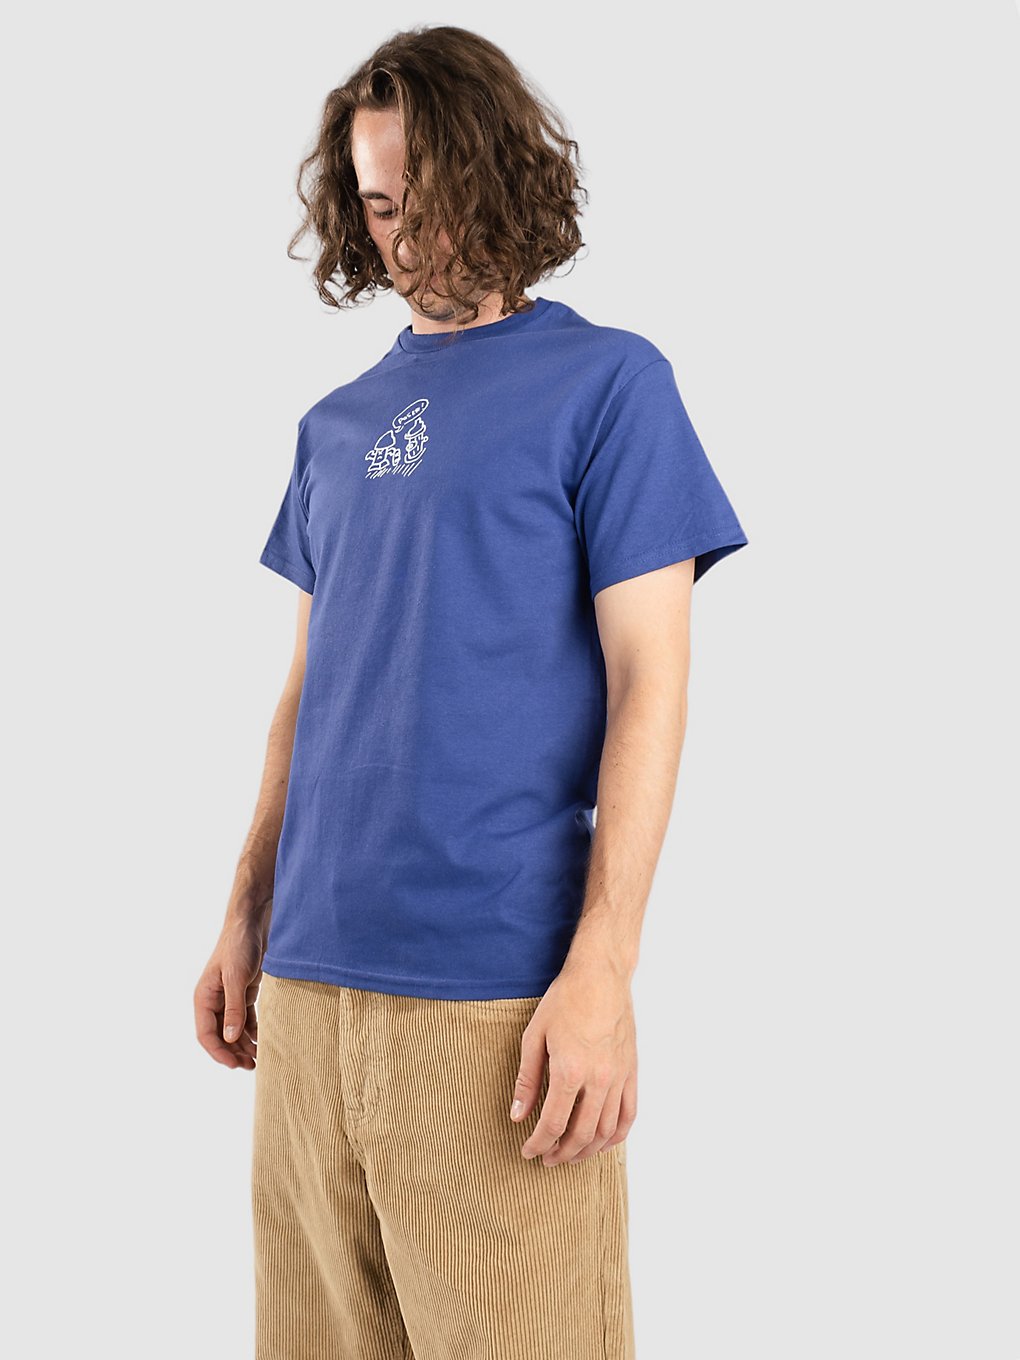 A.Lab Poser >:( T-Shirt blauw